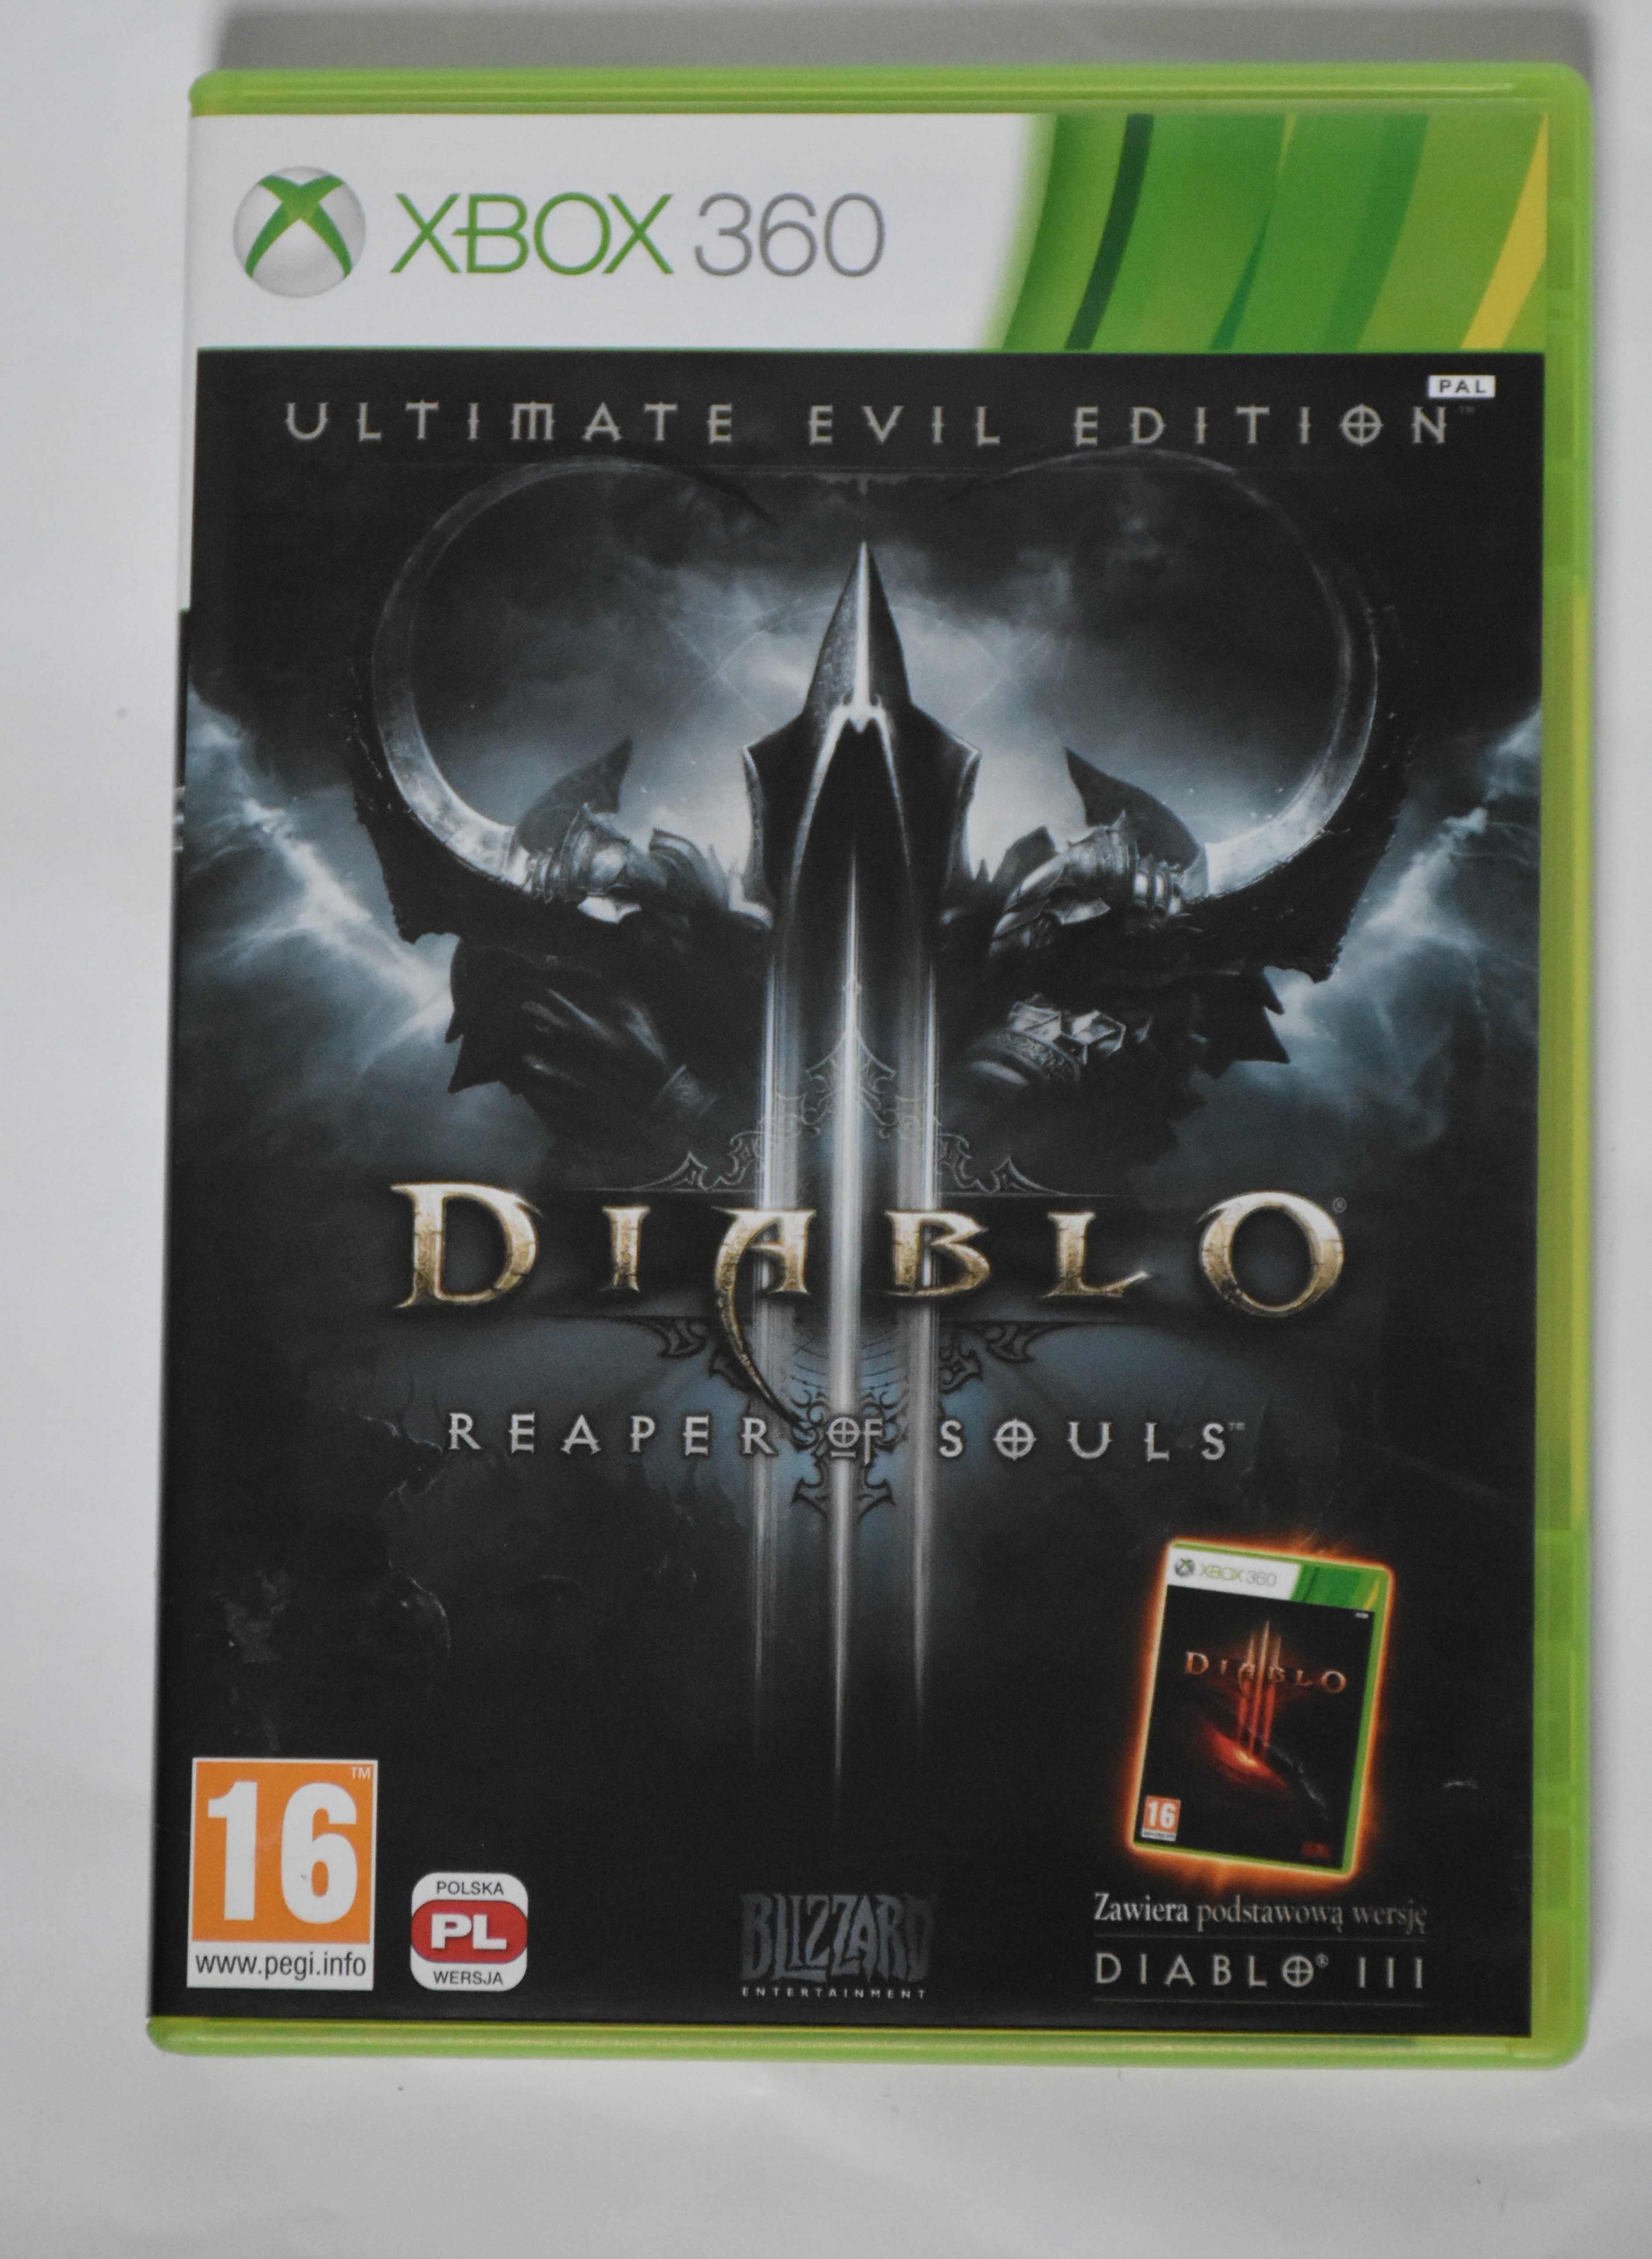 Gra Diablo III Reaper of Souls z polskim lektorem na xbox 360 !